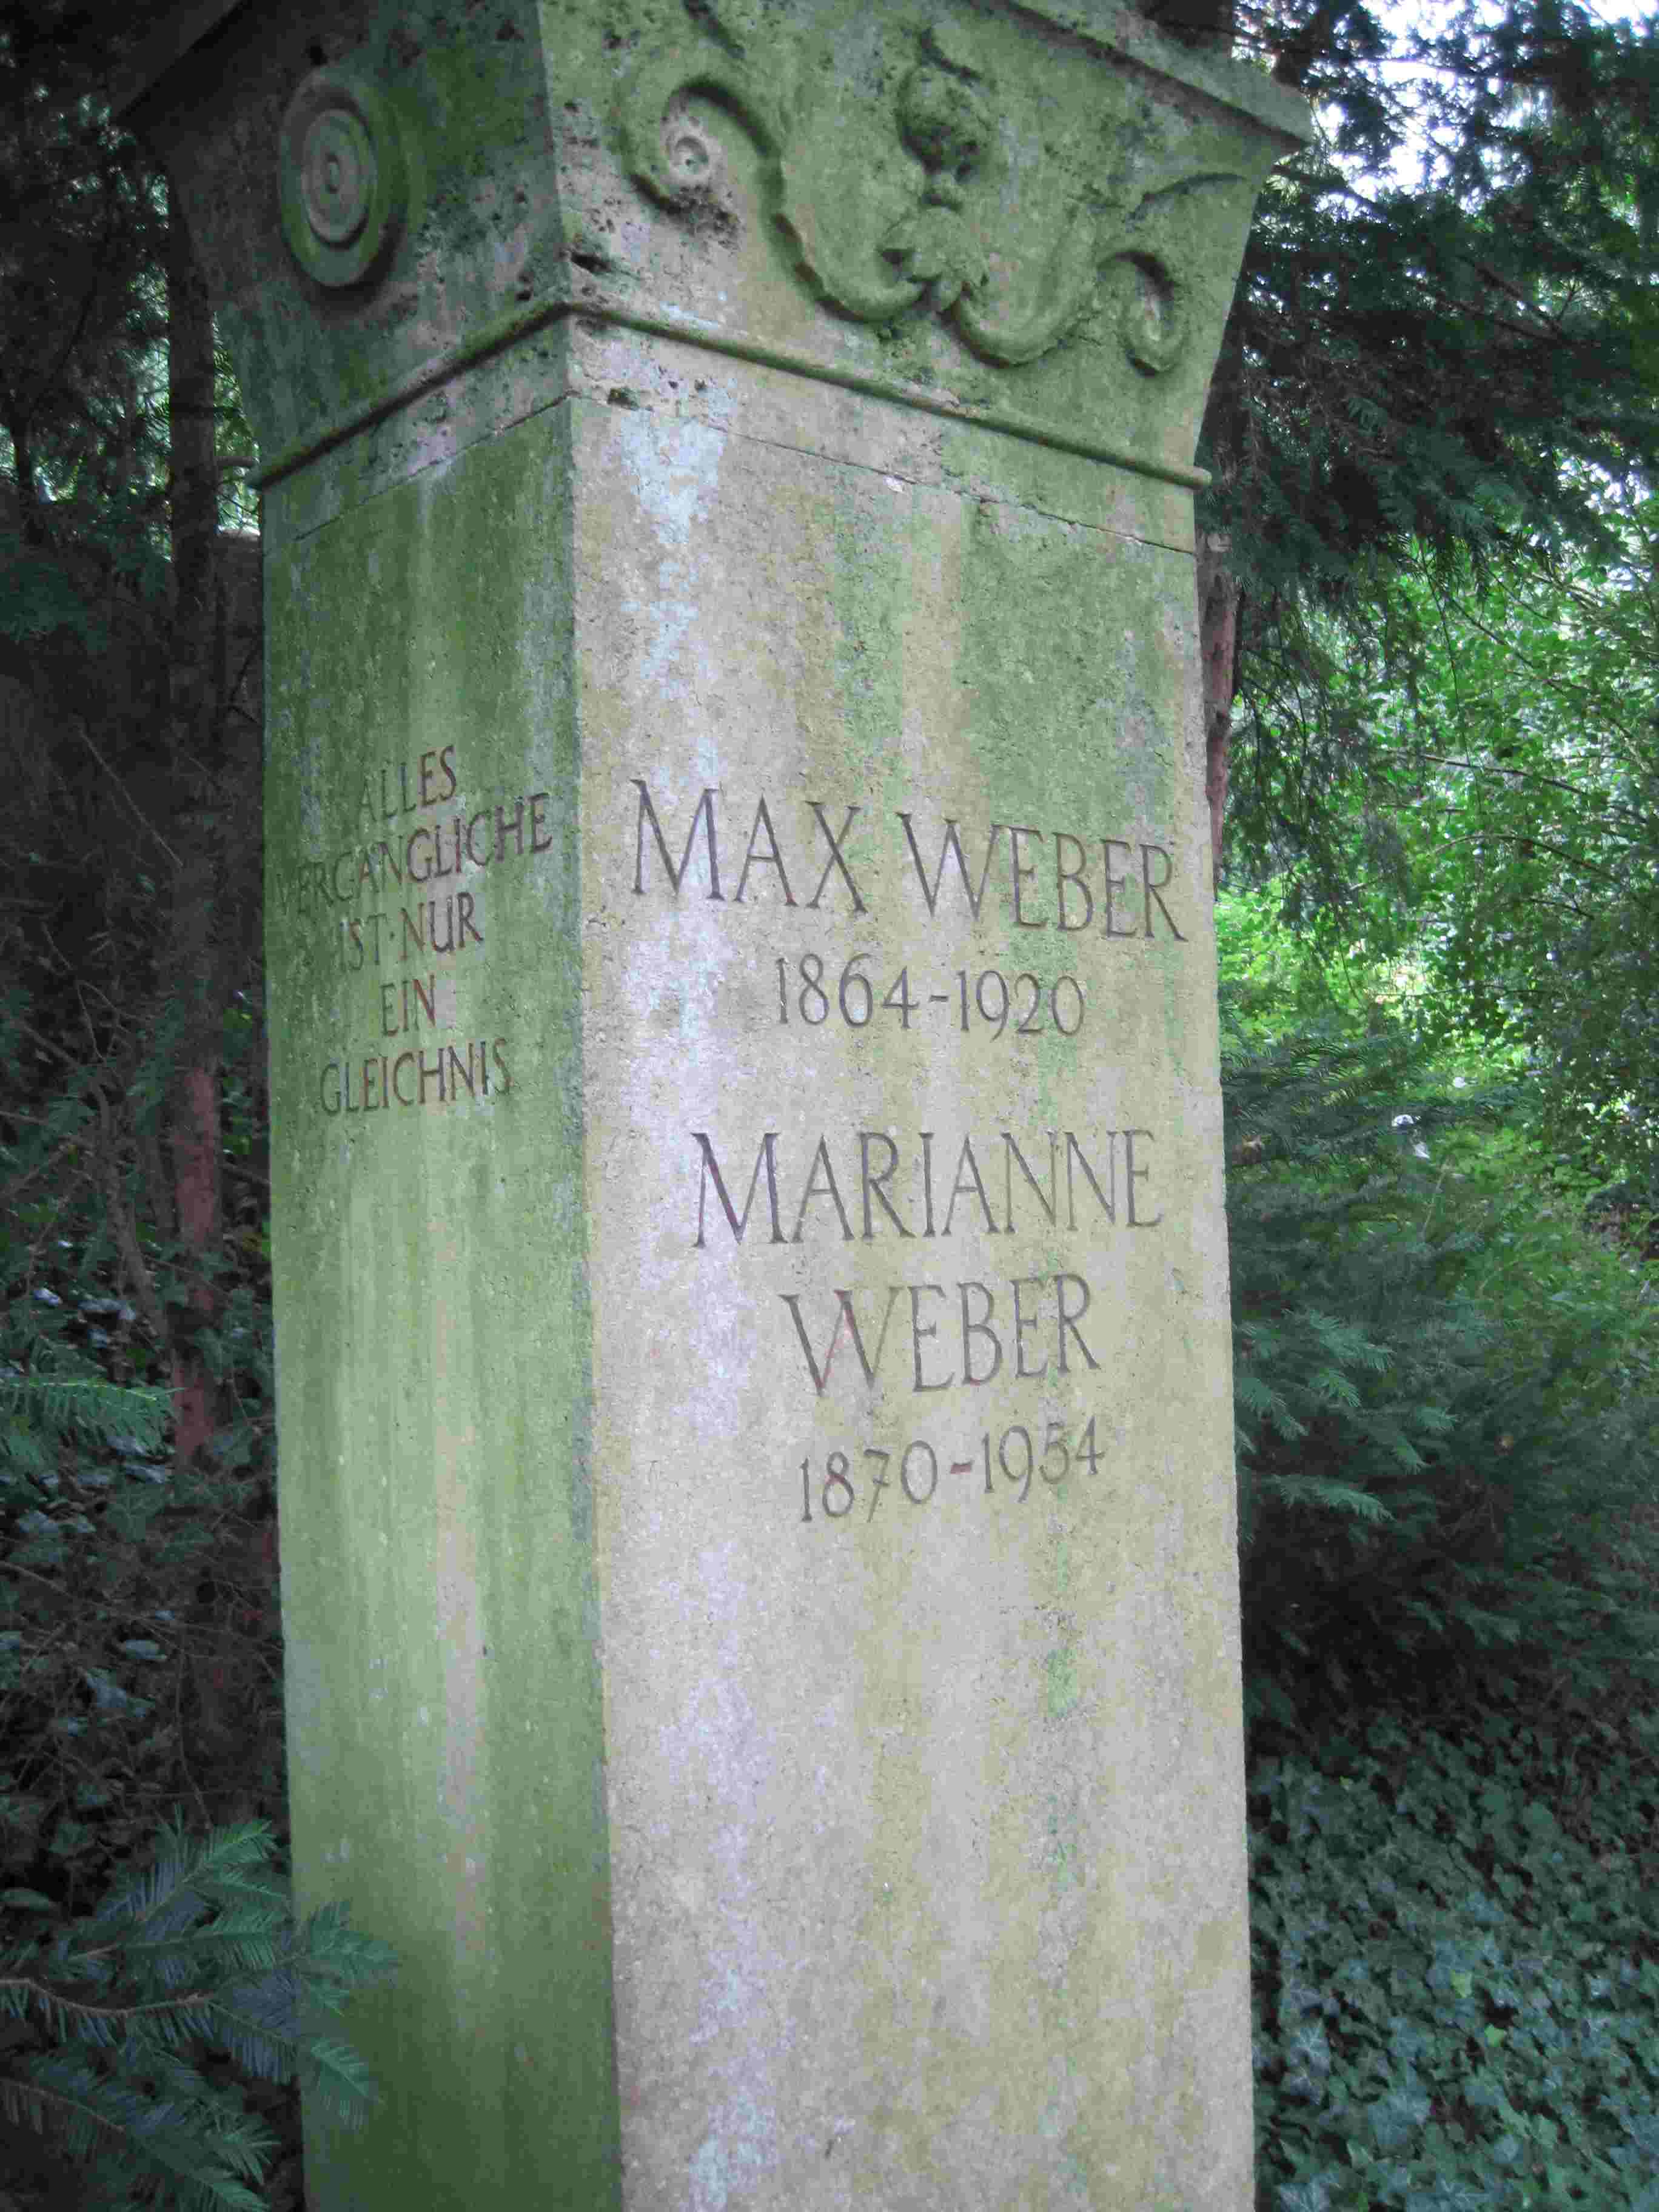 Max Weber, 1864-1920